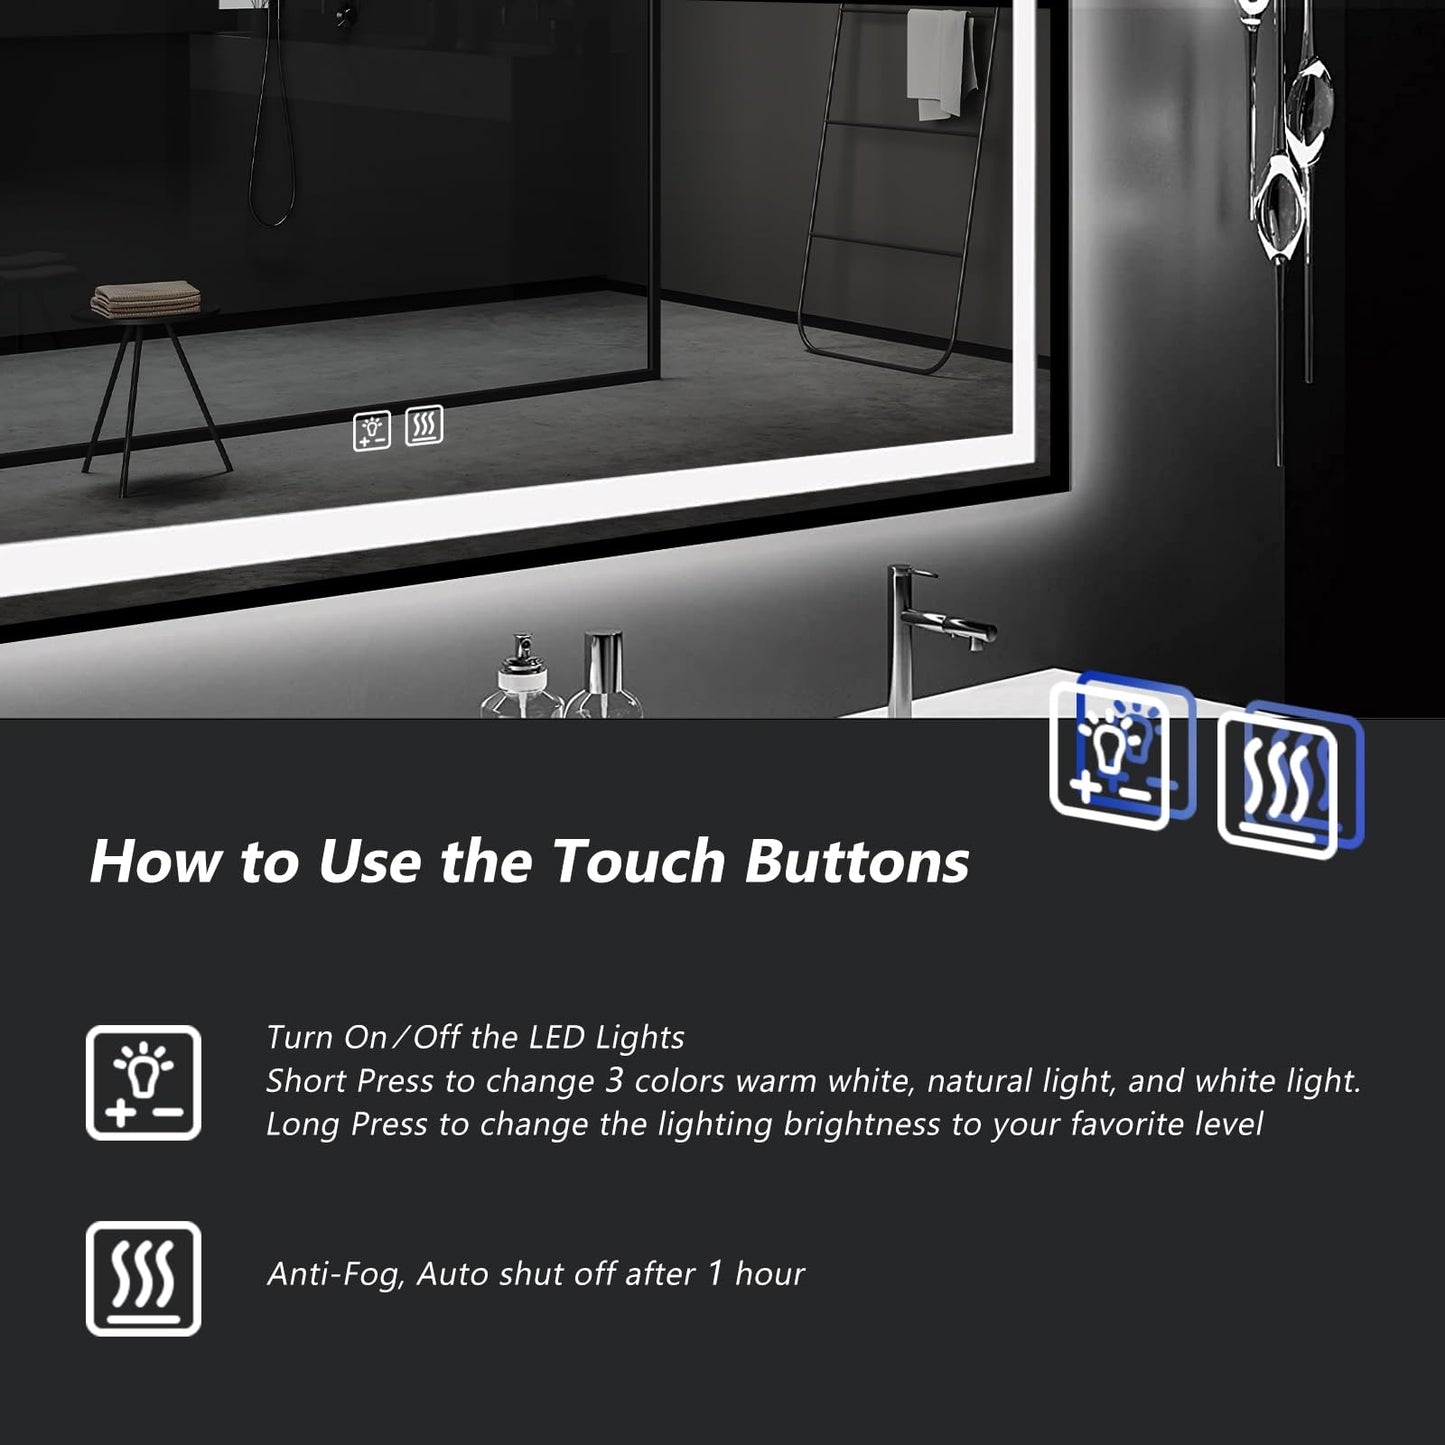 Black Aluminum Framed LED Bathroom Mirror